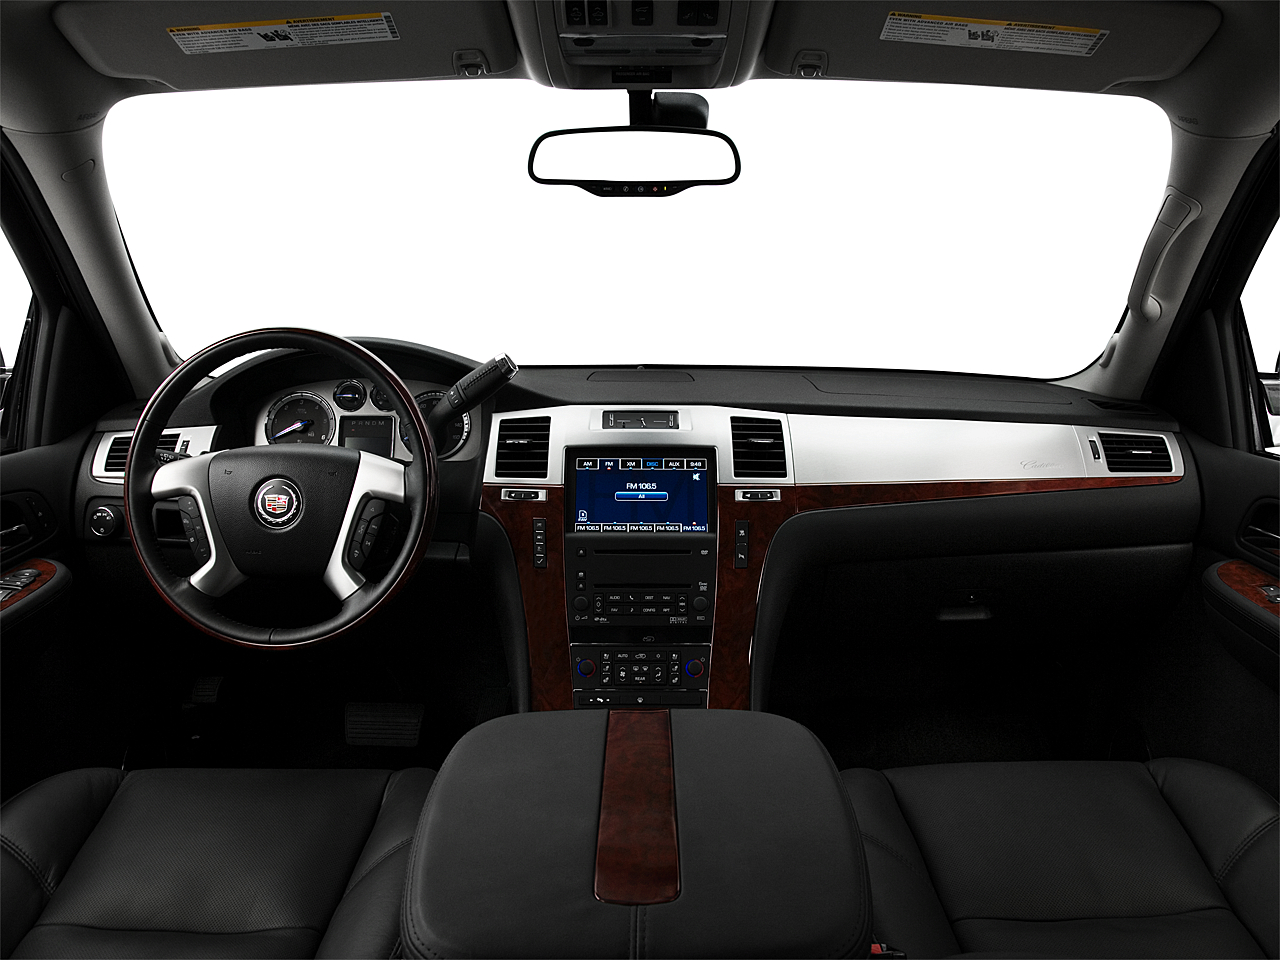 2009 Cadillac Escalade ESV 4dr SUV - Research - GrooveCar